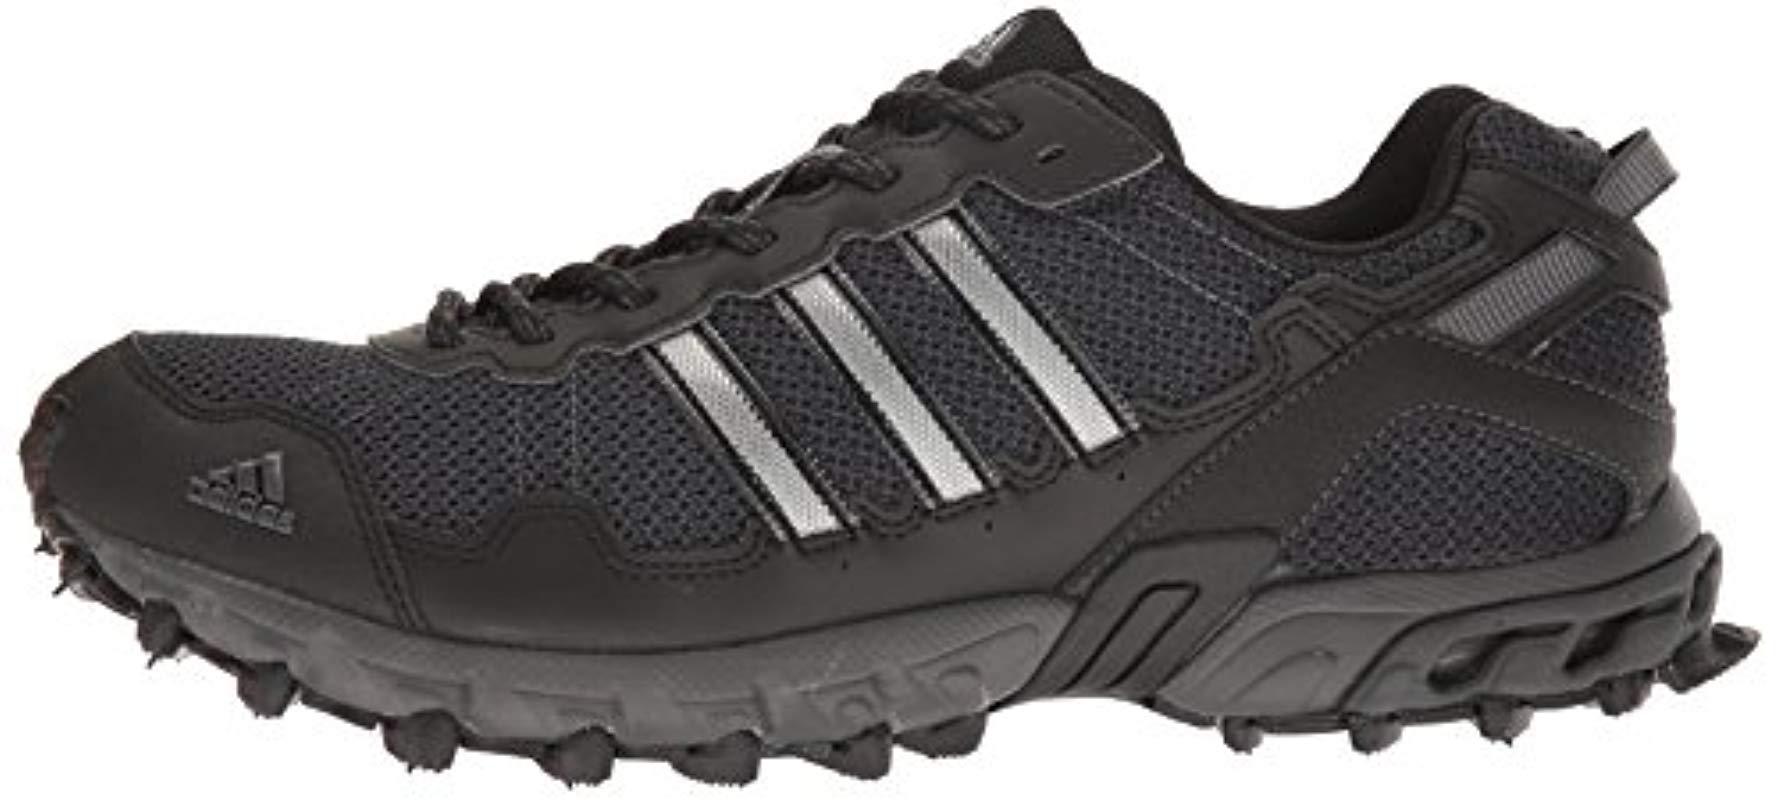 adidas Synthetic Rockadia M Trail Running Shoe in Black/Black/Dark Grey  Heather (Black) for Men - Lyst